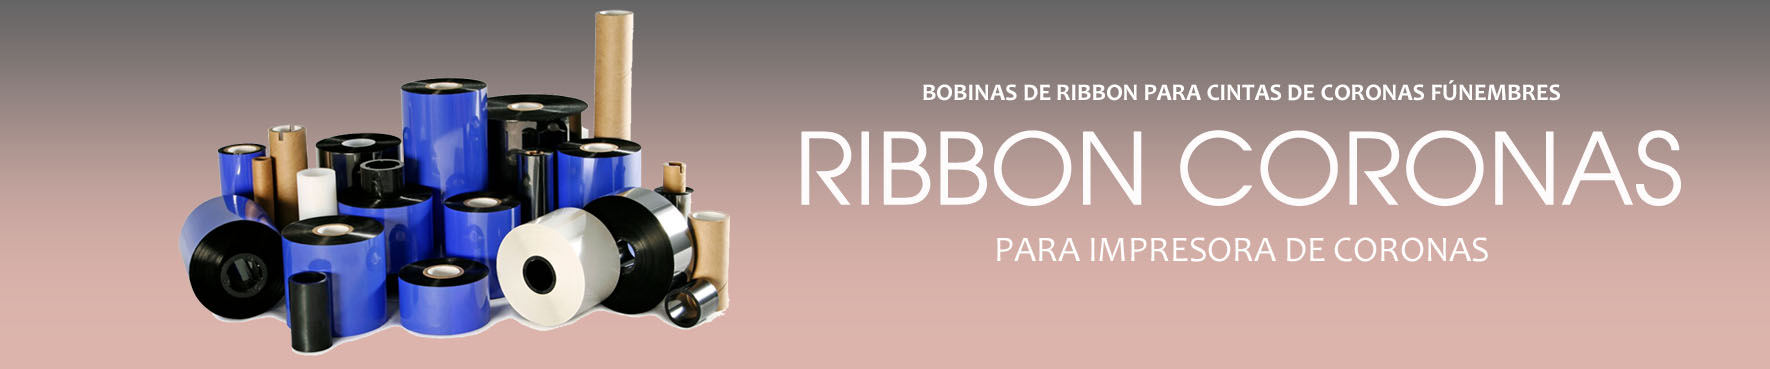 ribbon-coronas-funeraria